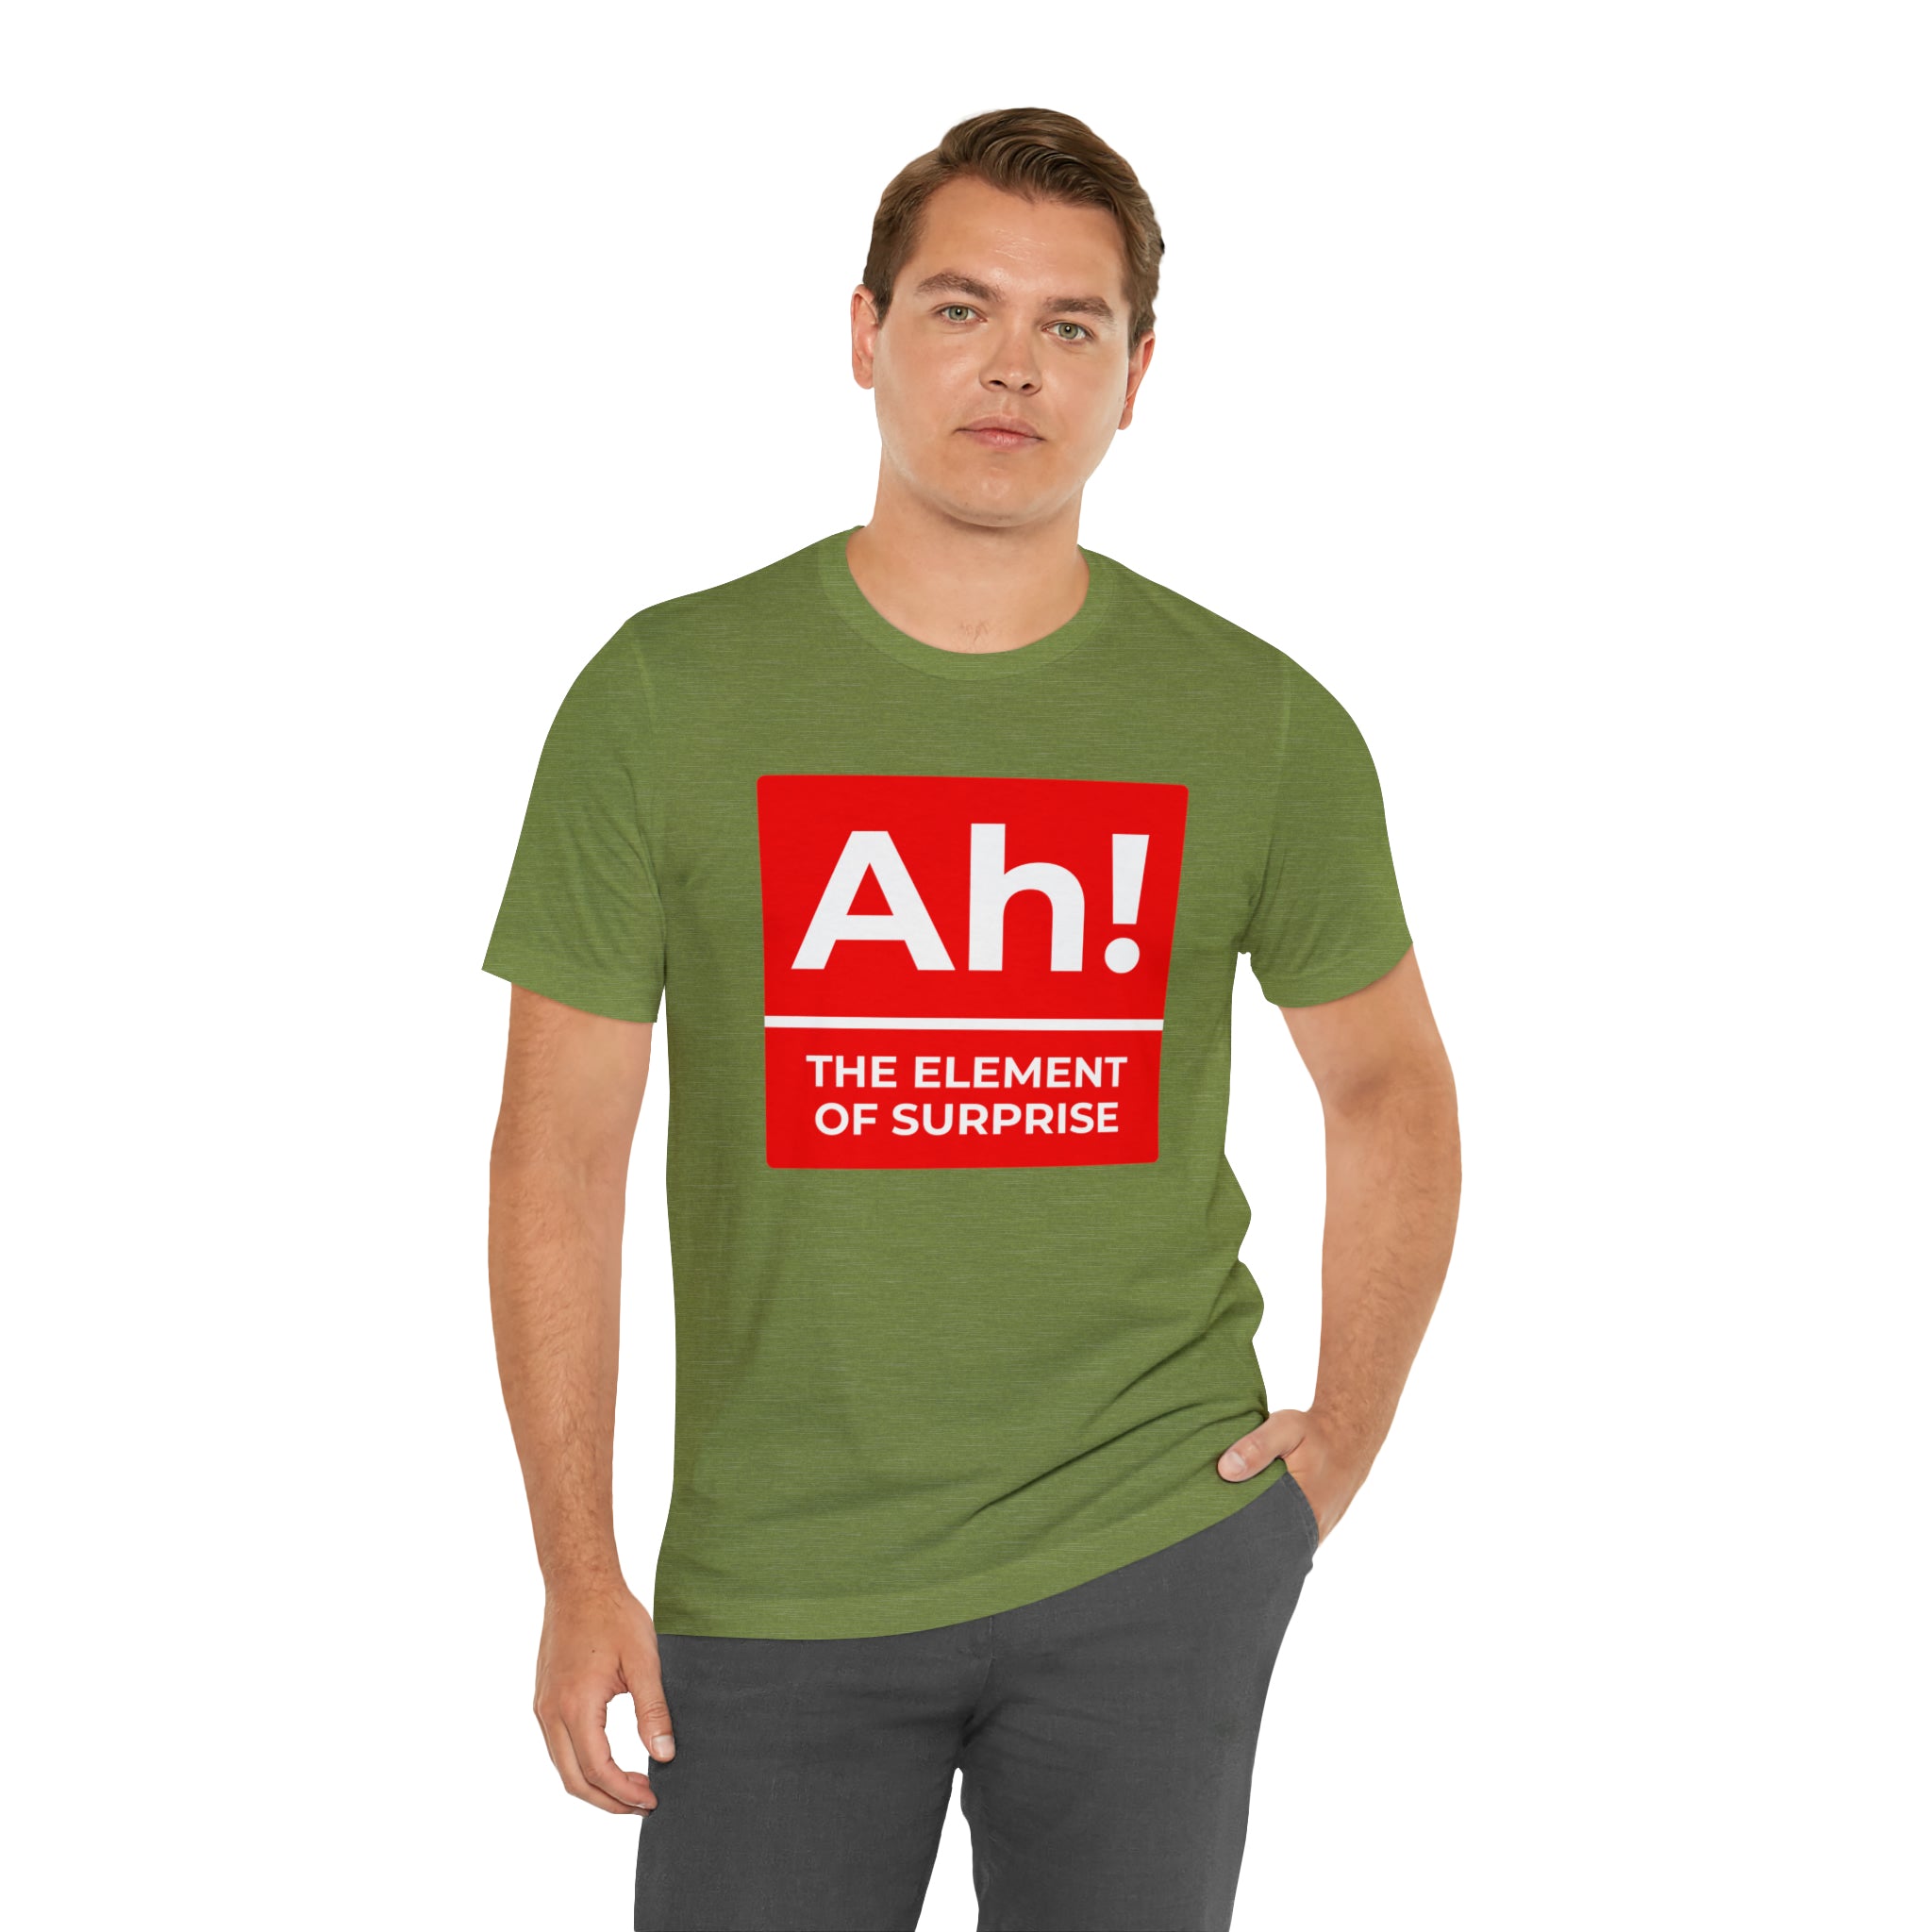 A man wearing a green Ah! the Element of Surprise T-shirt.